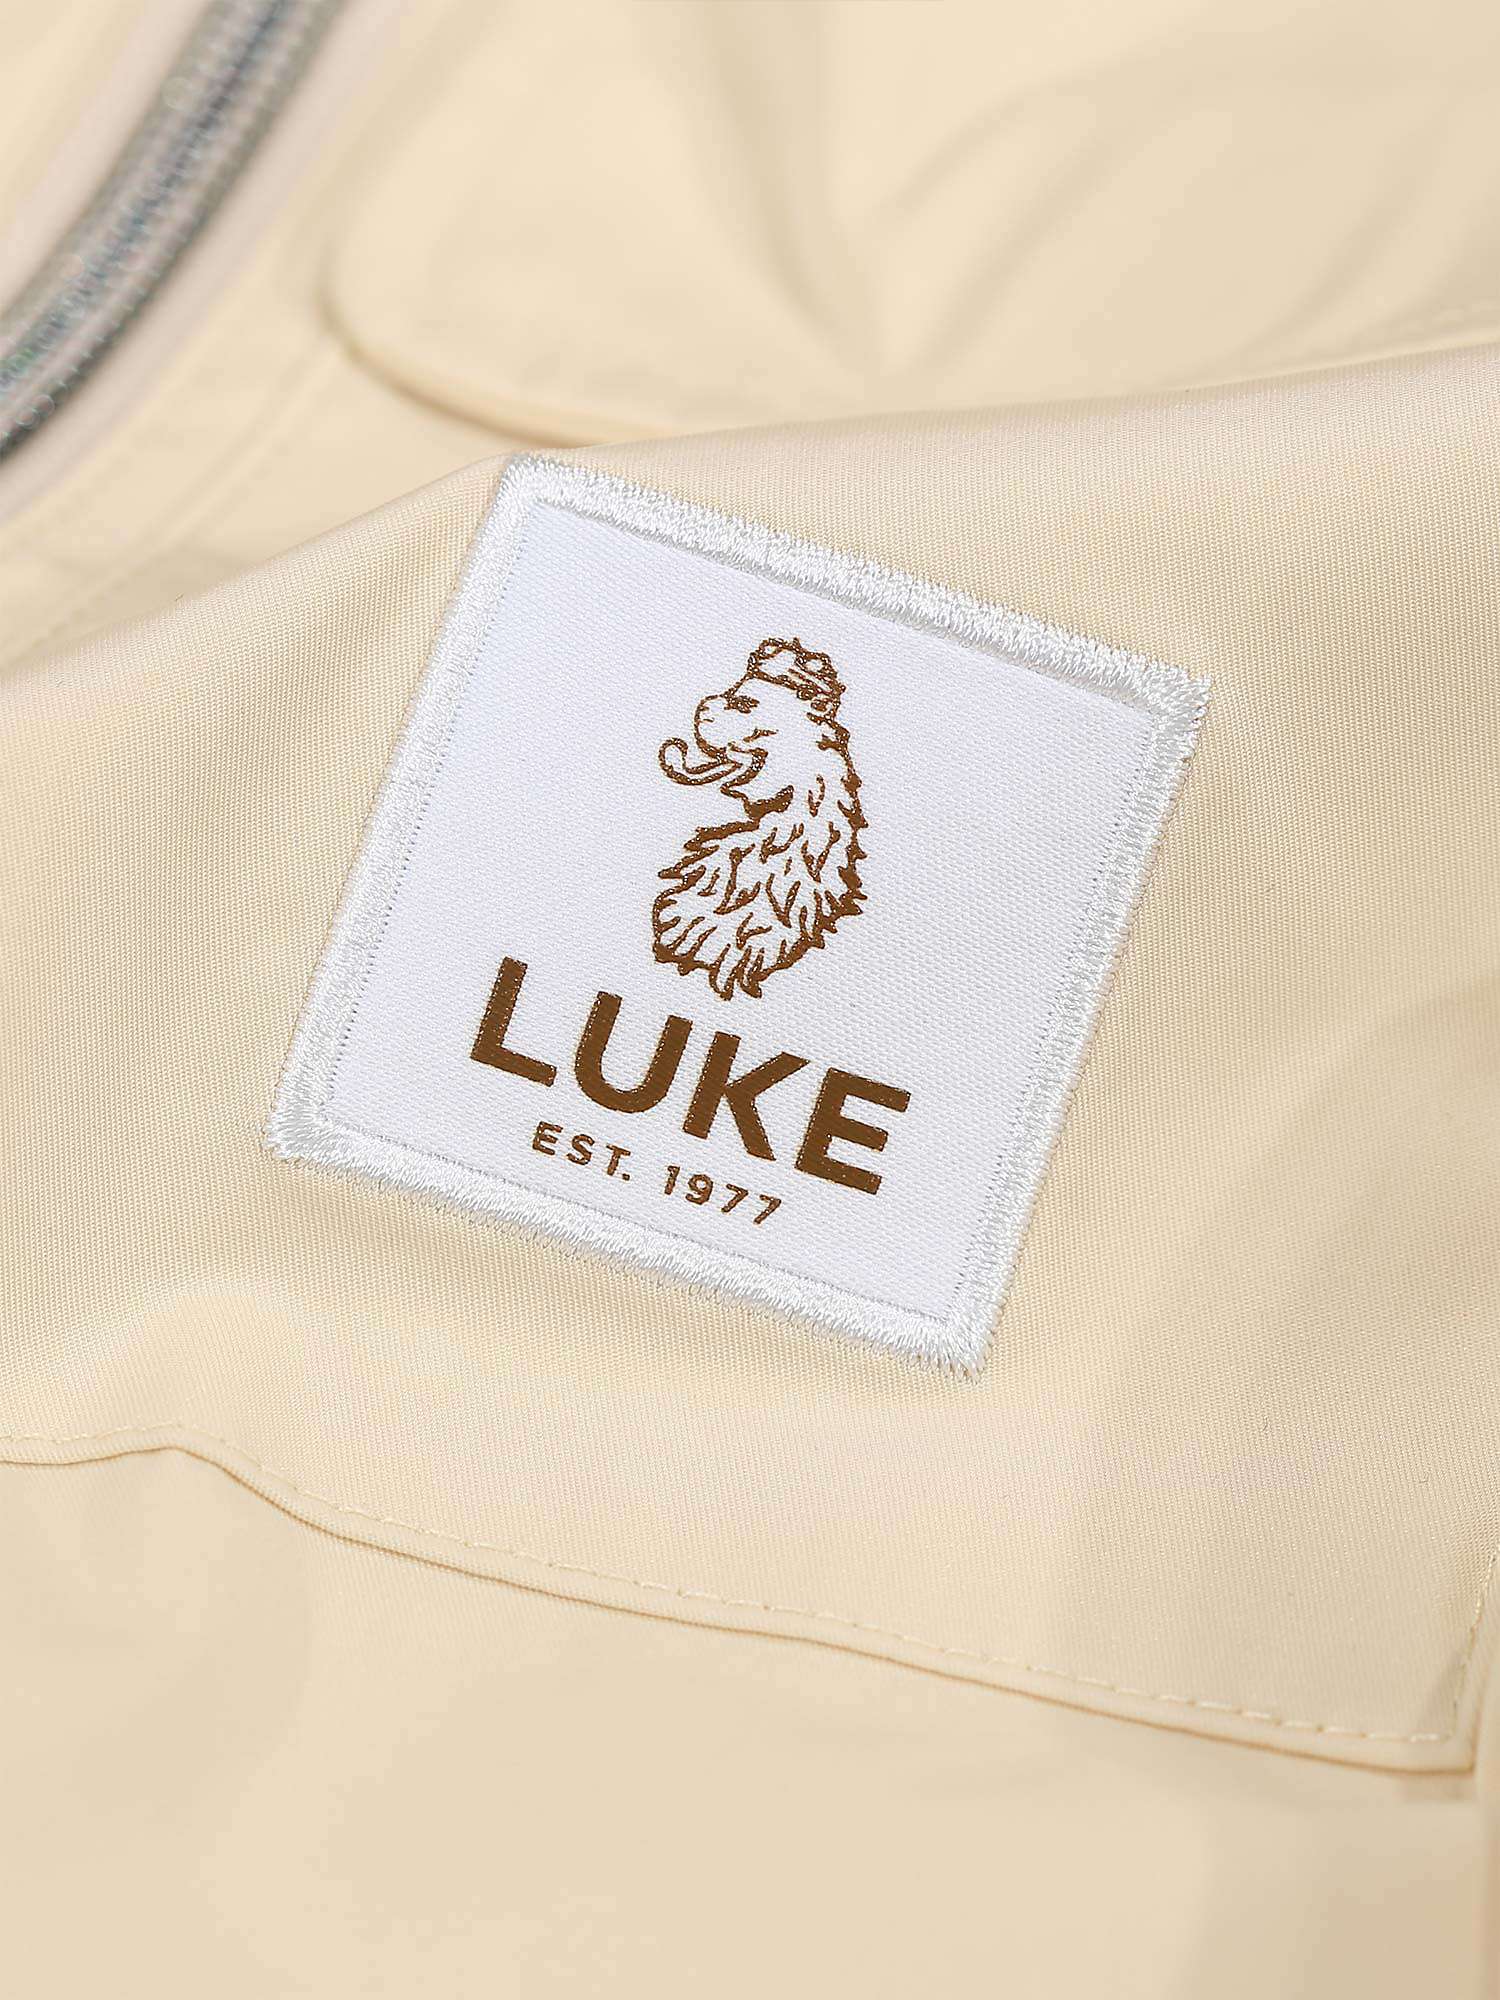 Buy LUKE 1977 Vietnam Technical jacket Online at johnlewis.com